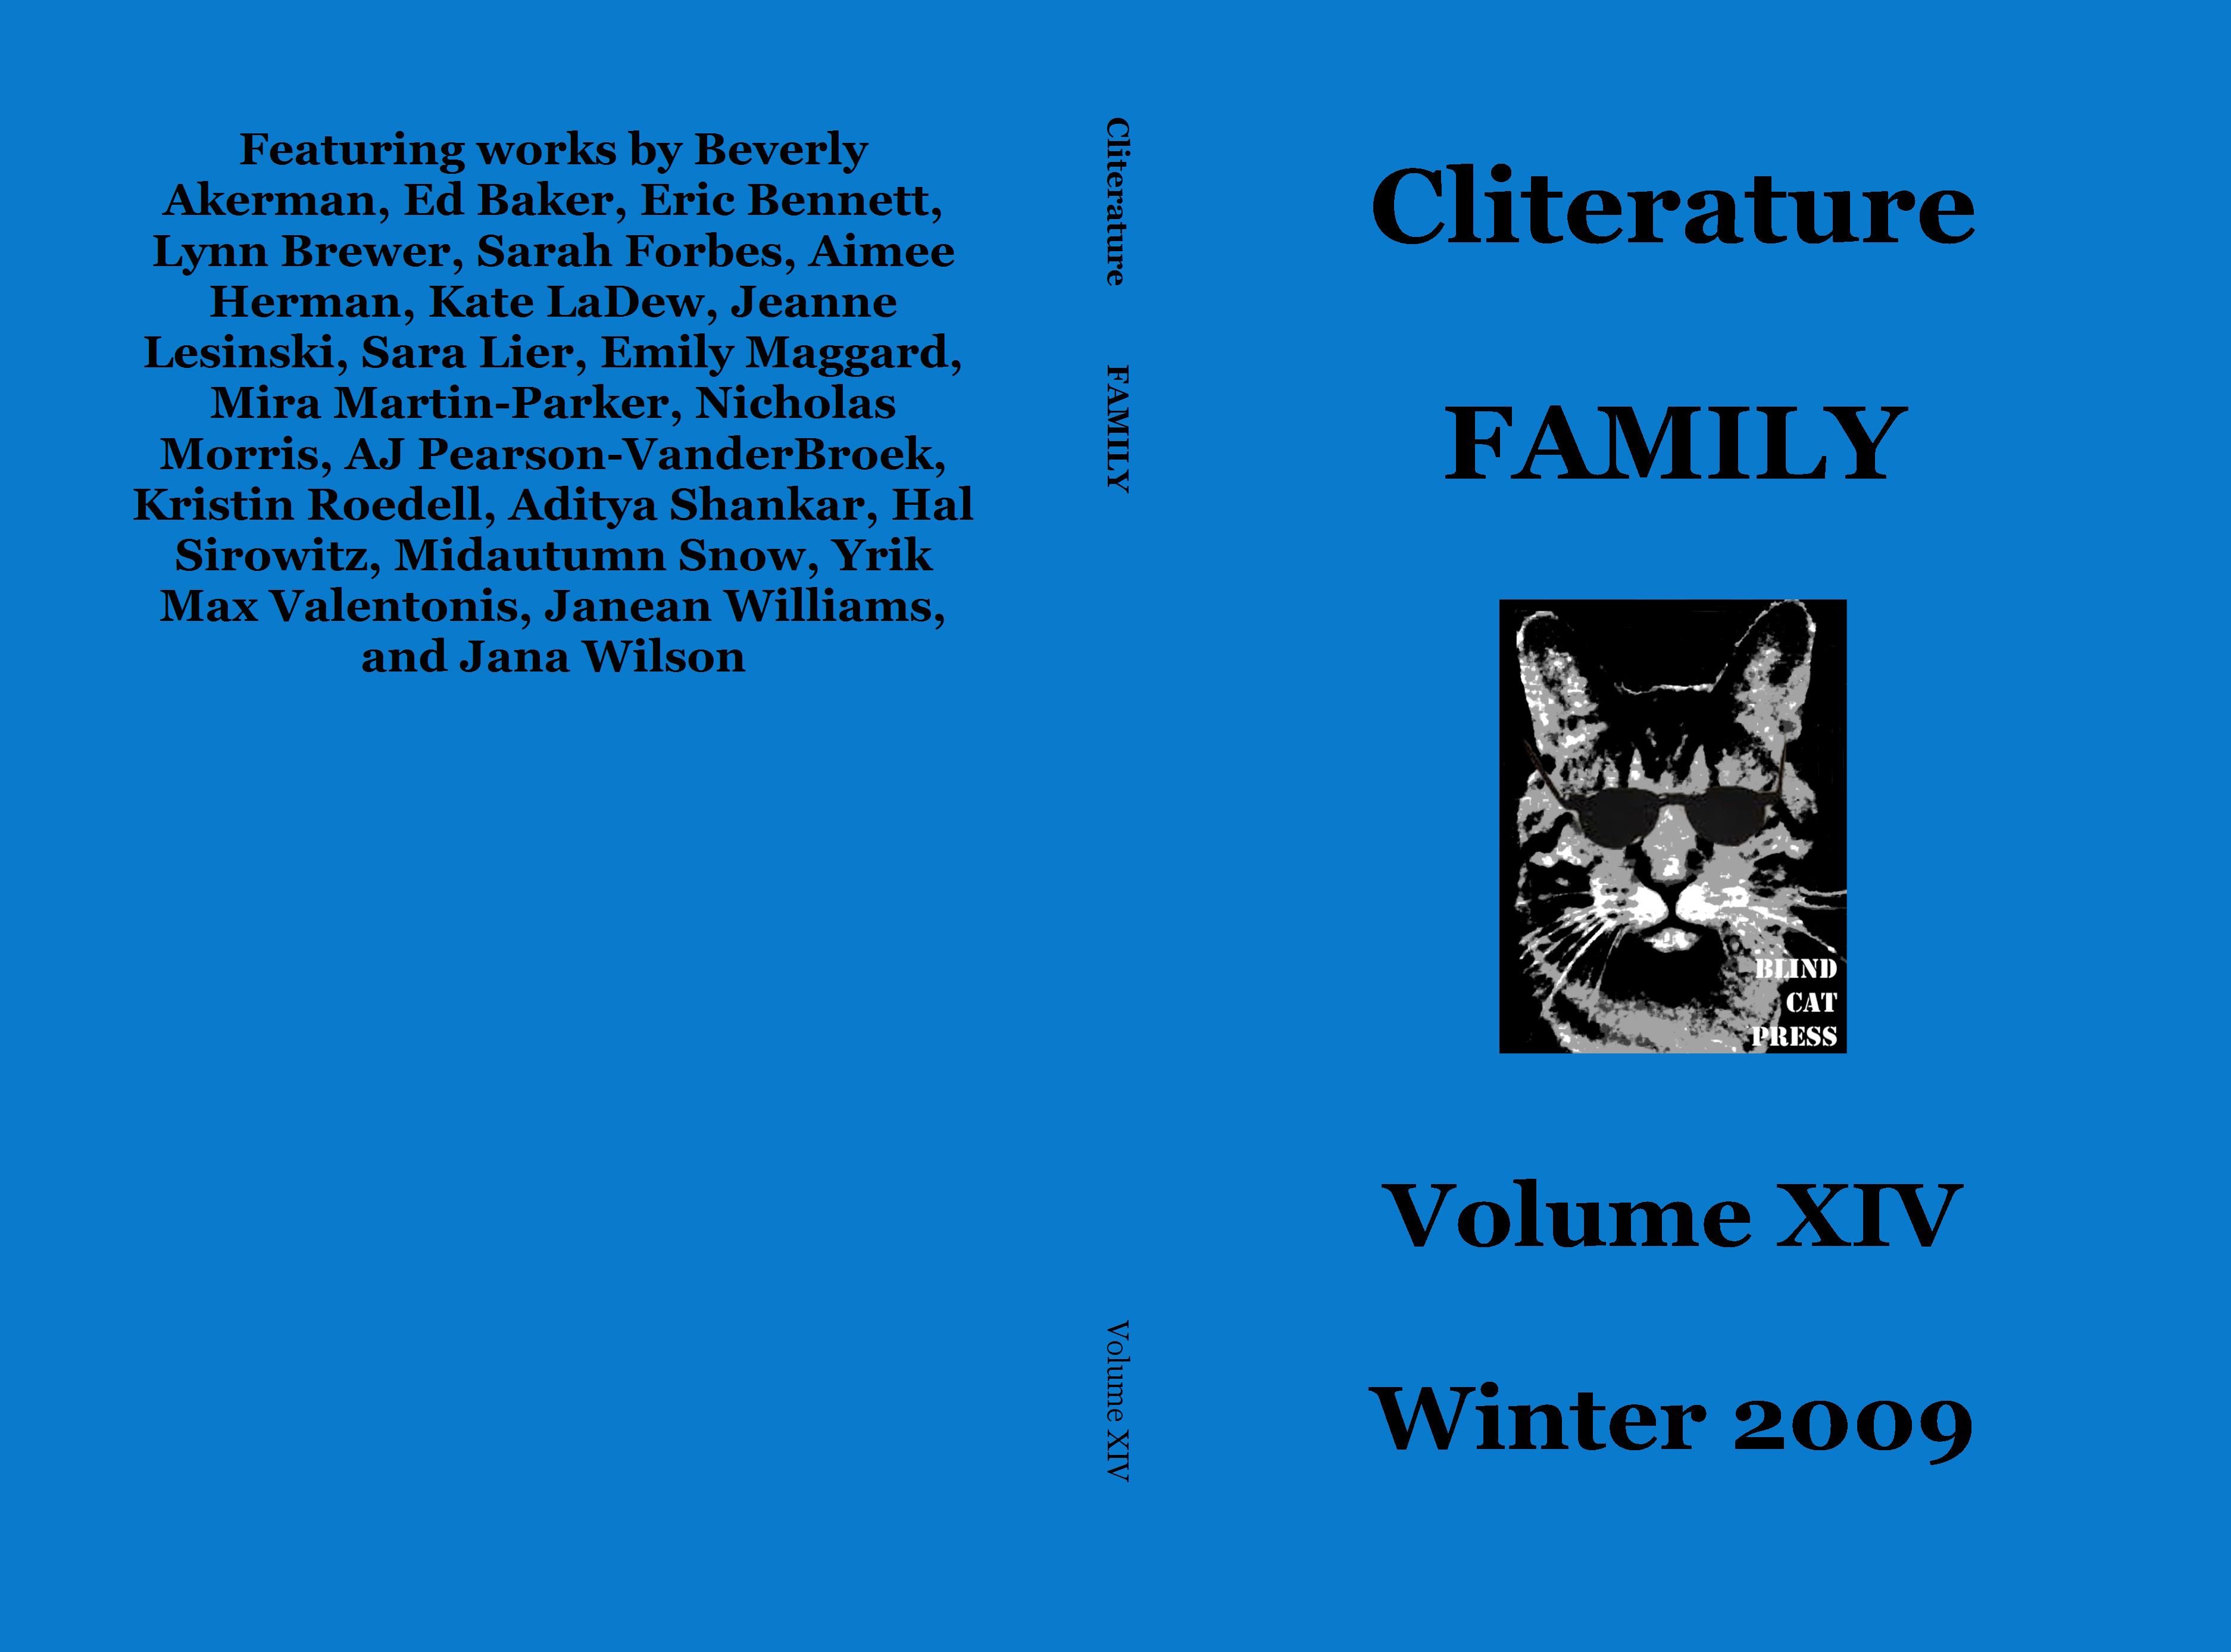 Cliterature FAMILY cover image